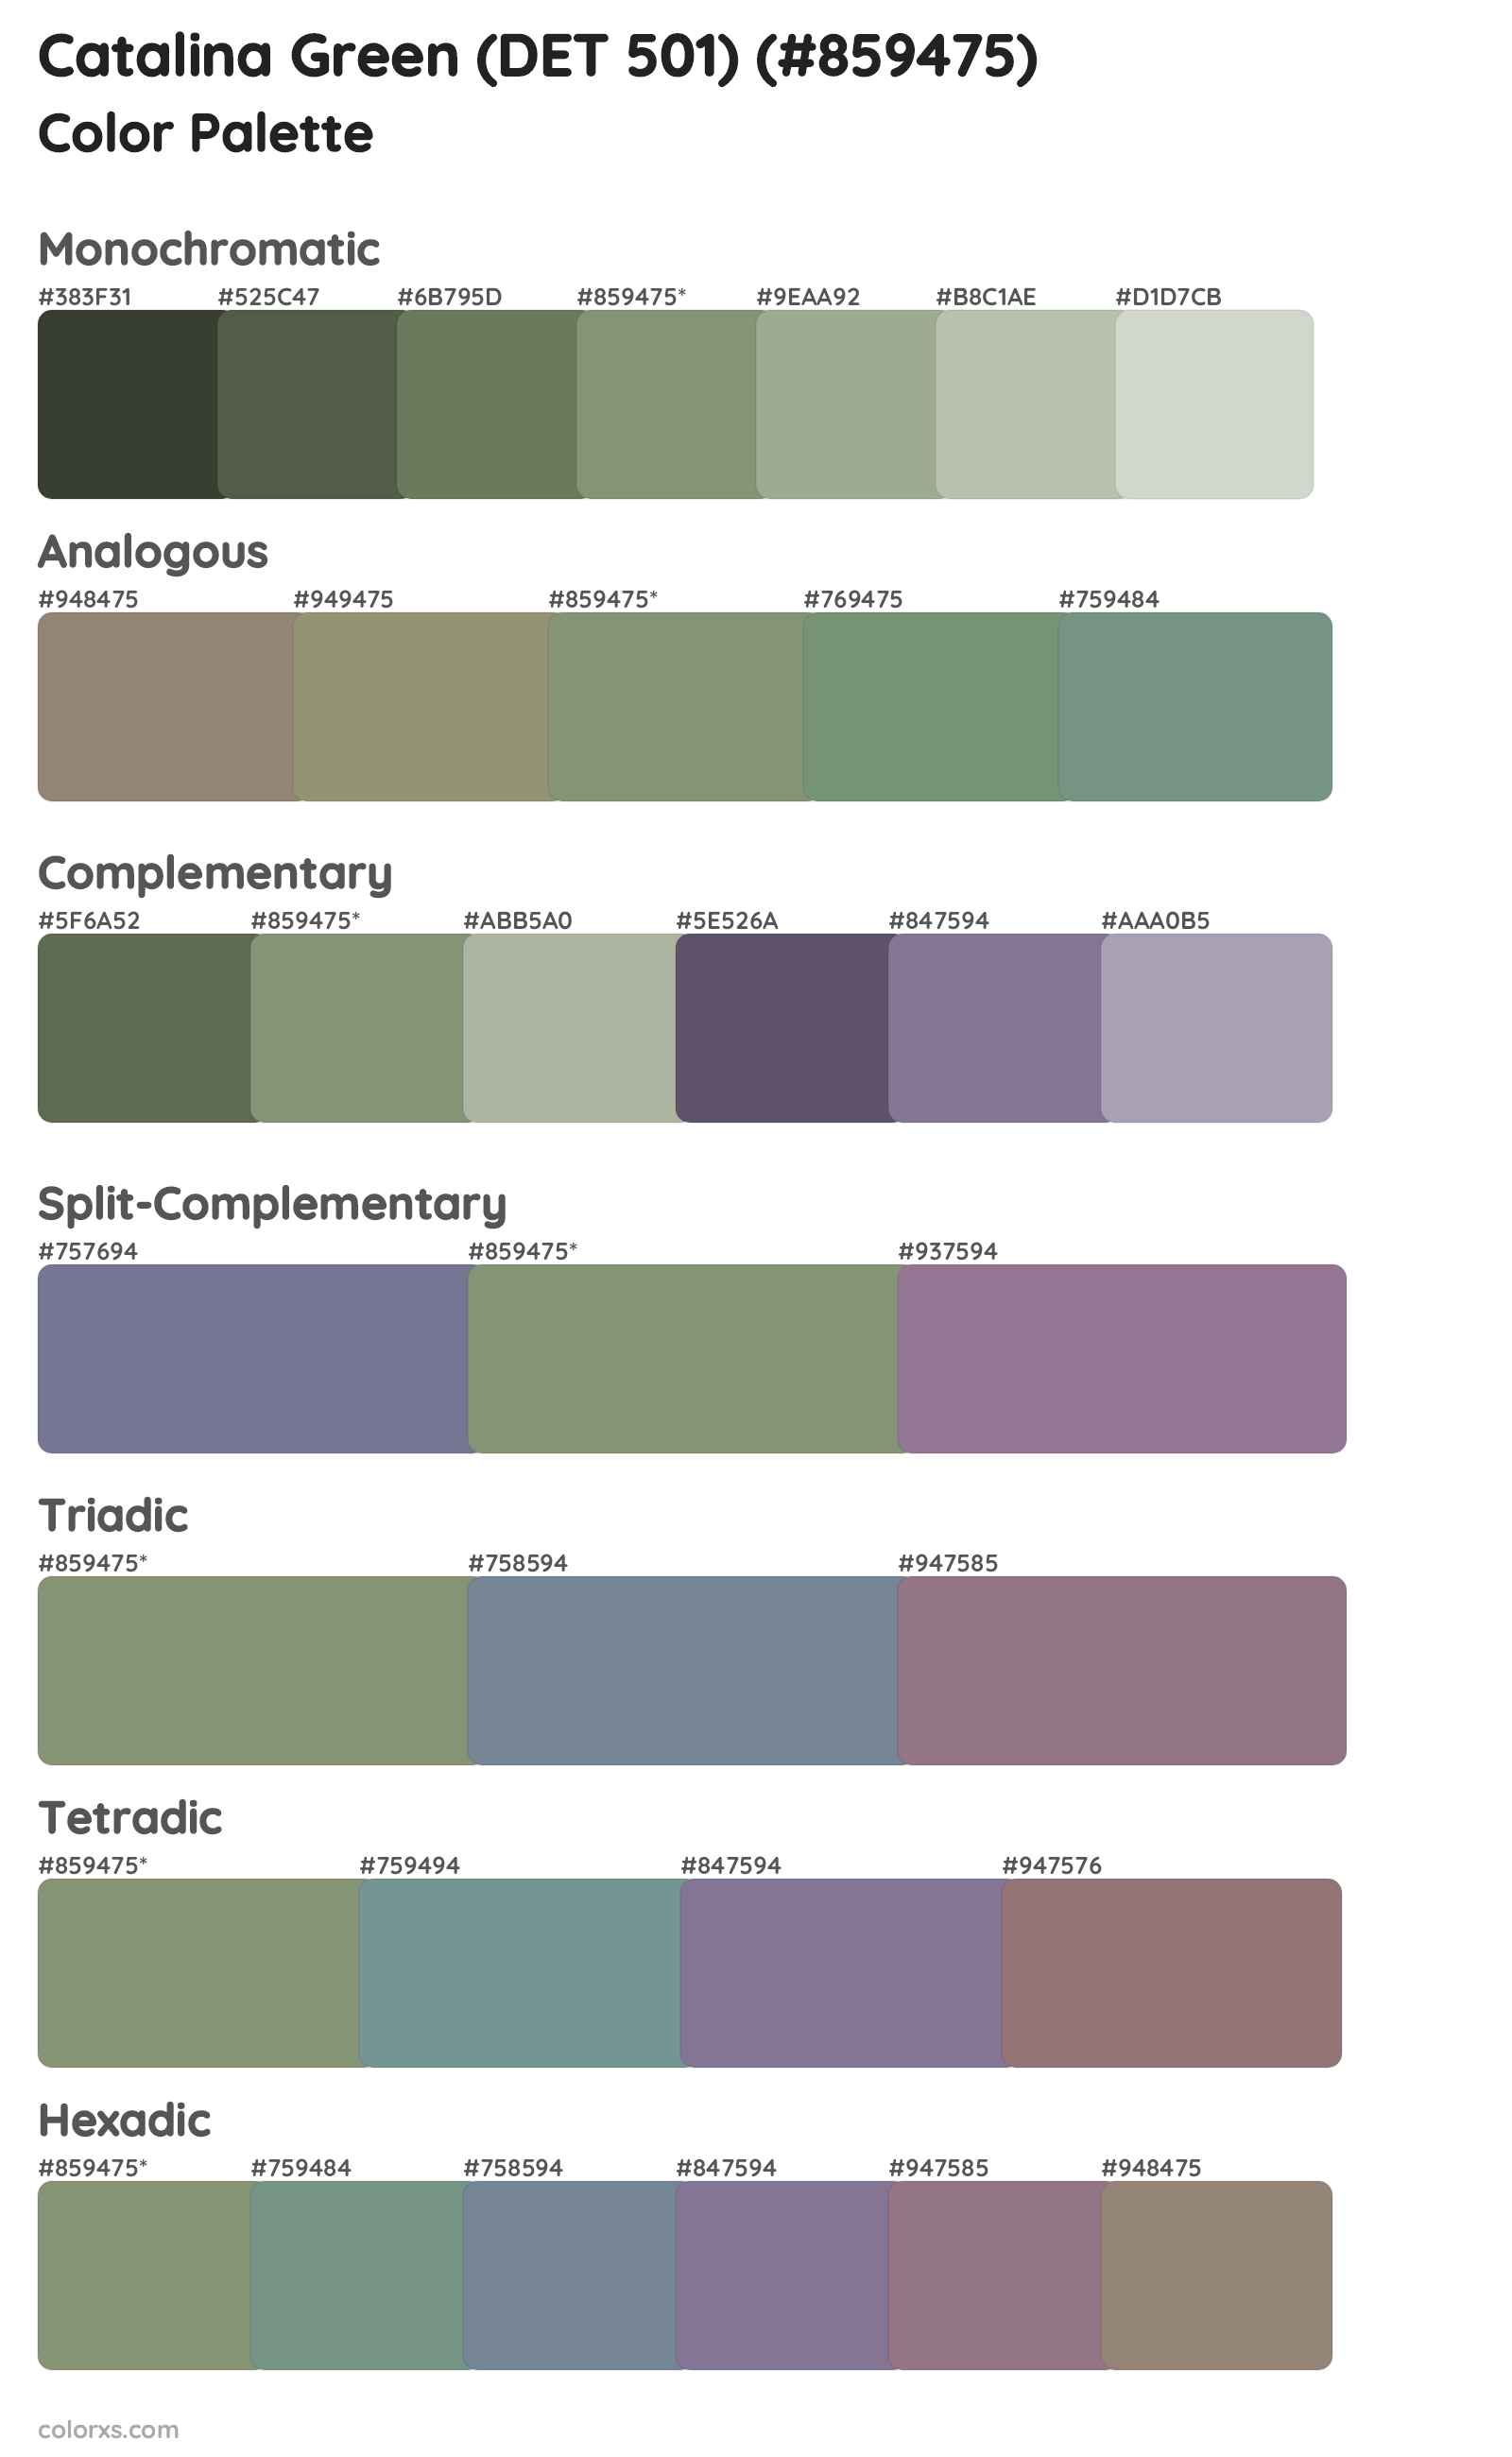 Catalina Green (DET 501) Color Scheme Palettes